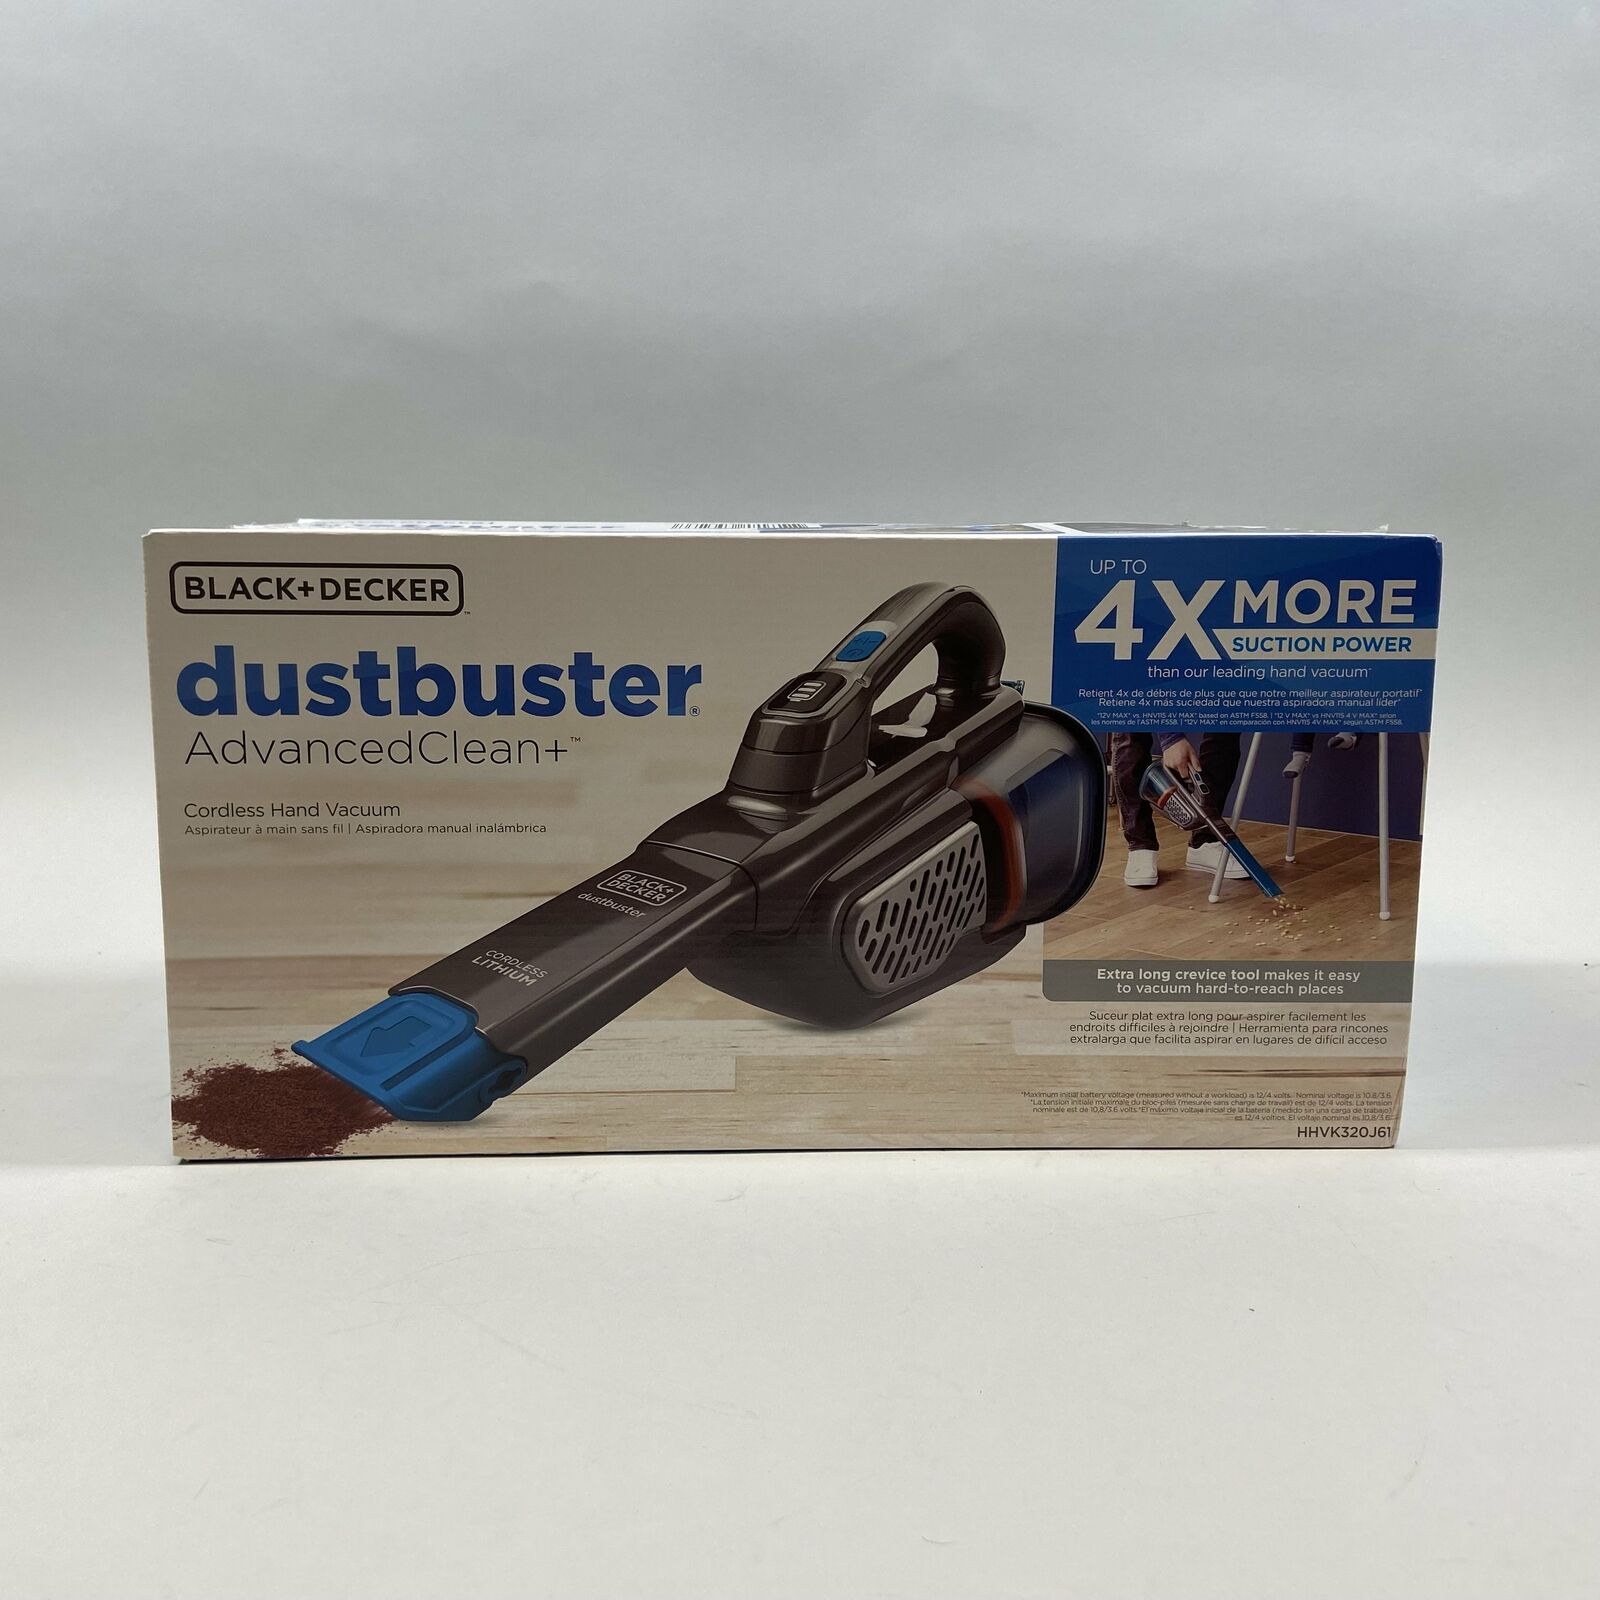 Black+decker Dustbuster Advancedclean+ Hand Vacuum Hhvk320j61 - New